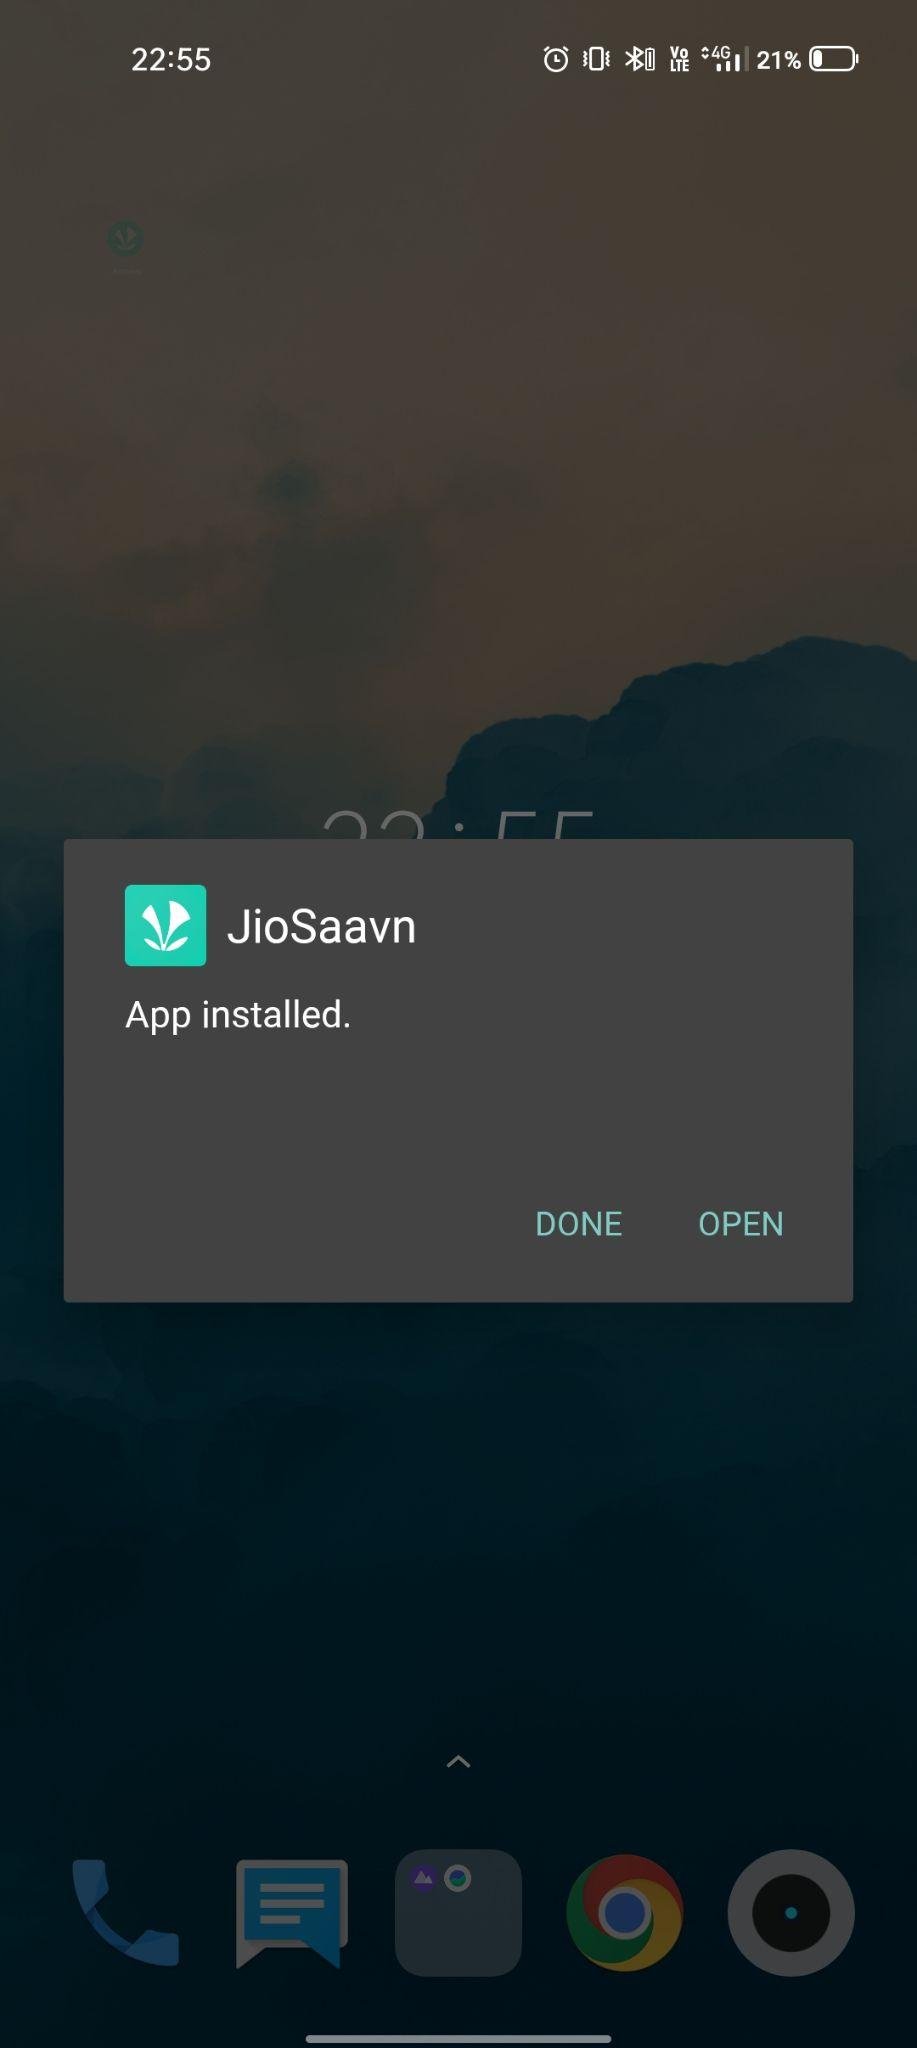 jiosaavn apk installed